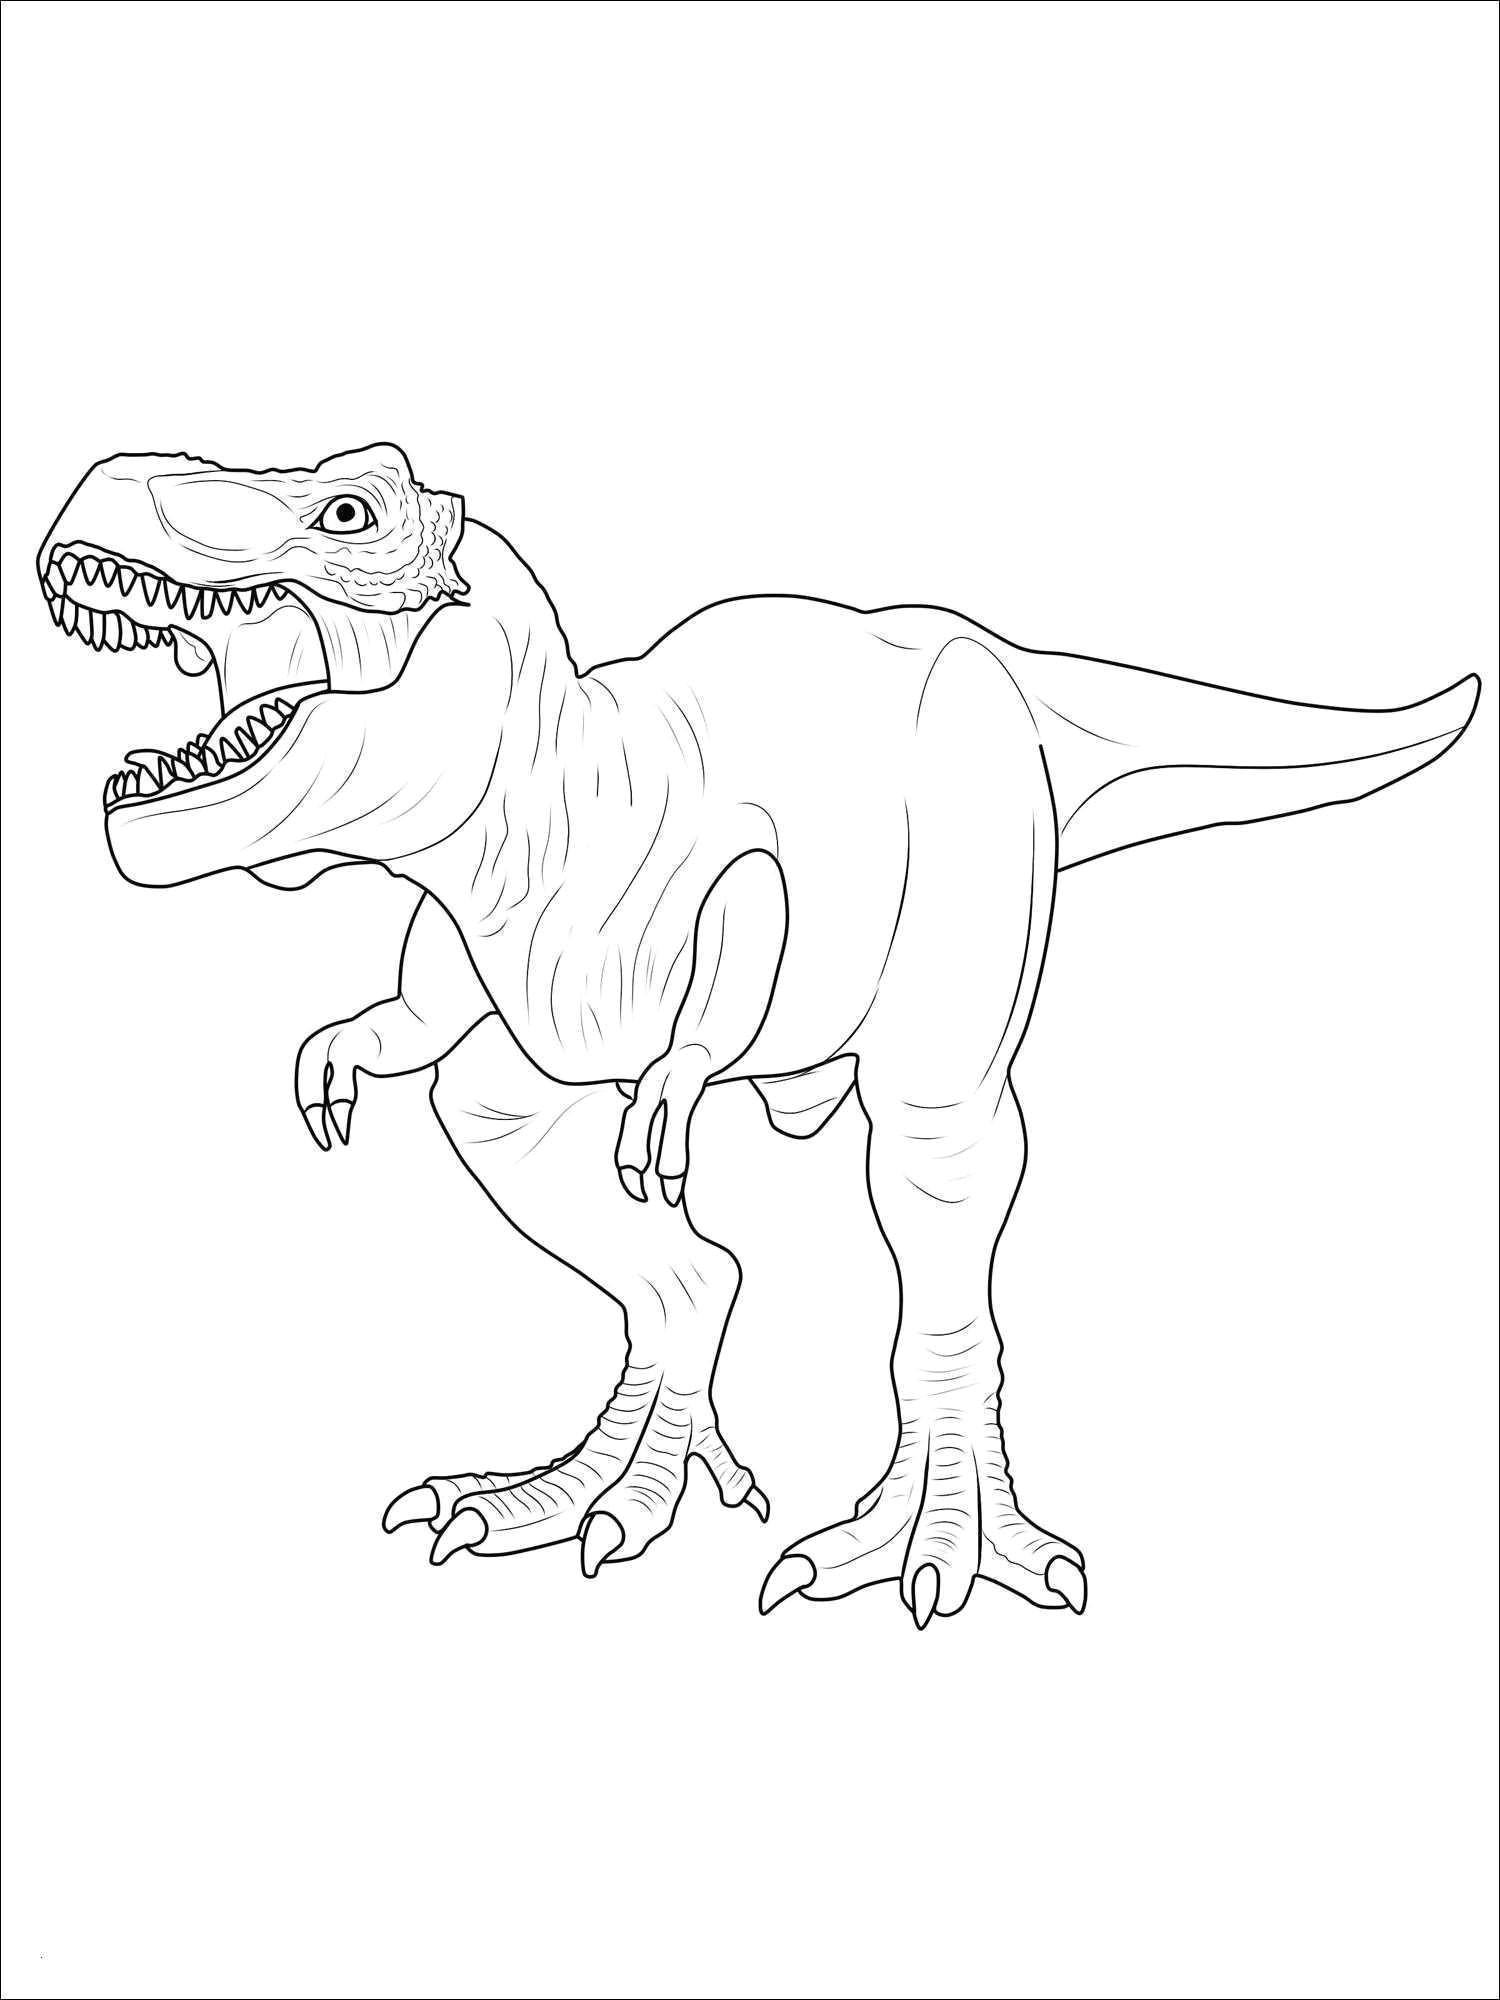 Drawing V Rex Tyrannosaurus Rex Ausmalbild Impressionnant Photos Malvorlagen